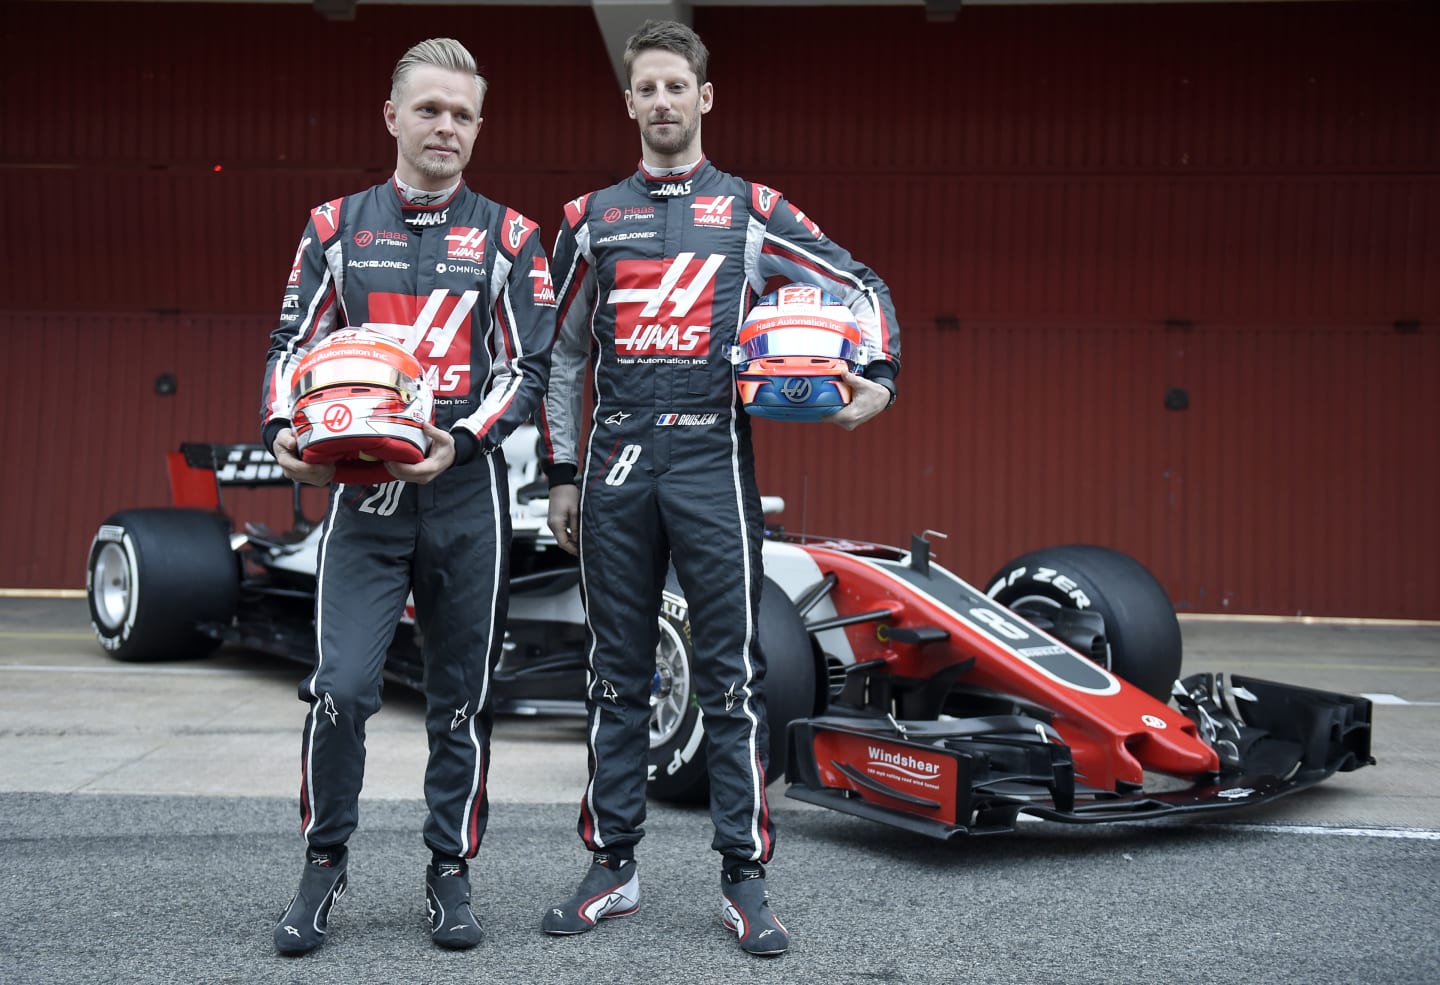 HAAS F1 Team's French driver Romain Grosjean (R) and HAAS F1 Team's Danish driver Kevin Magnussen